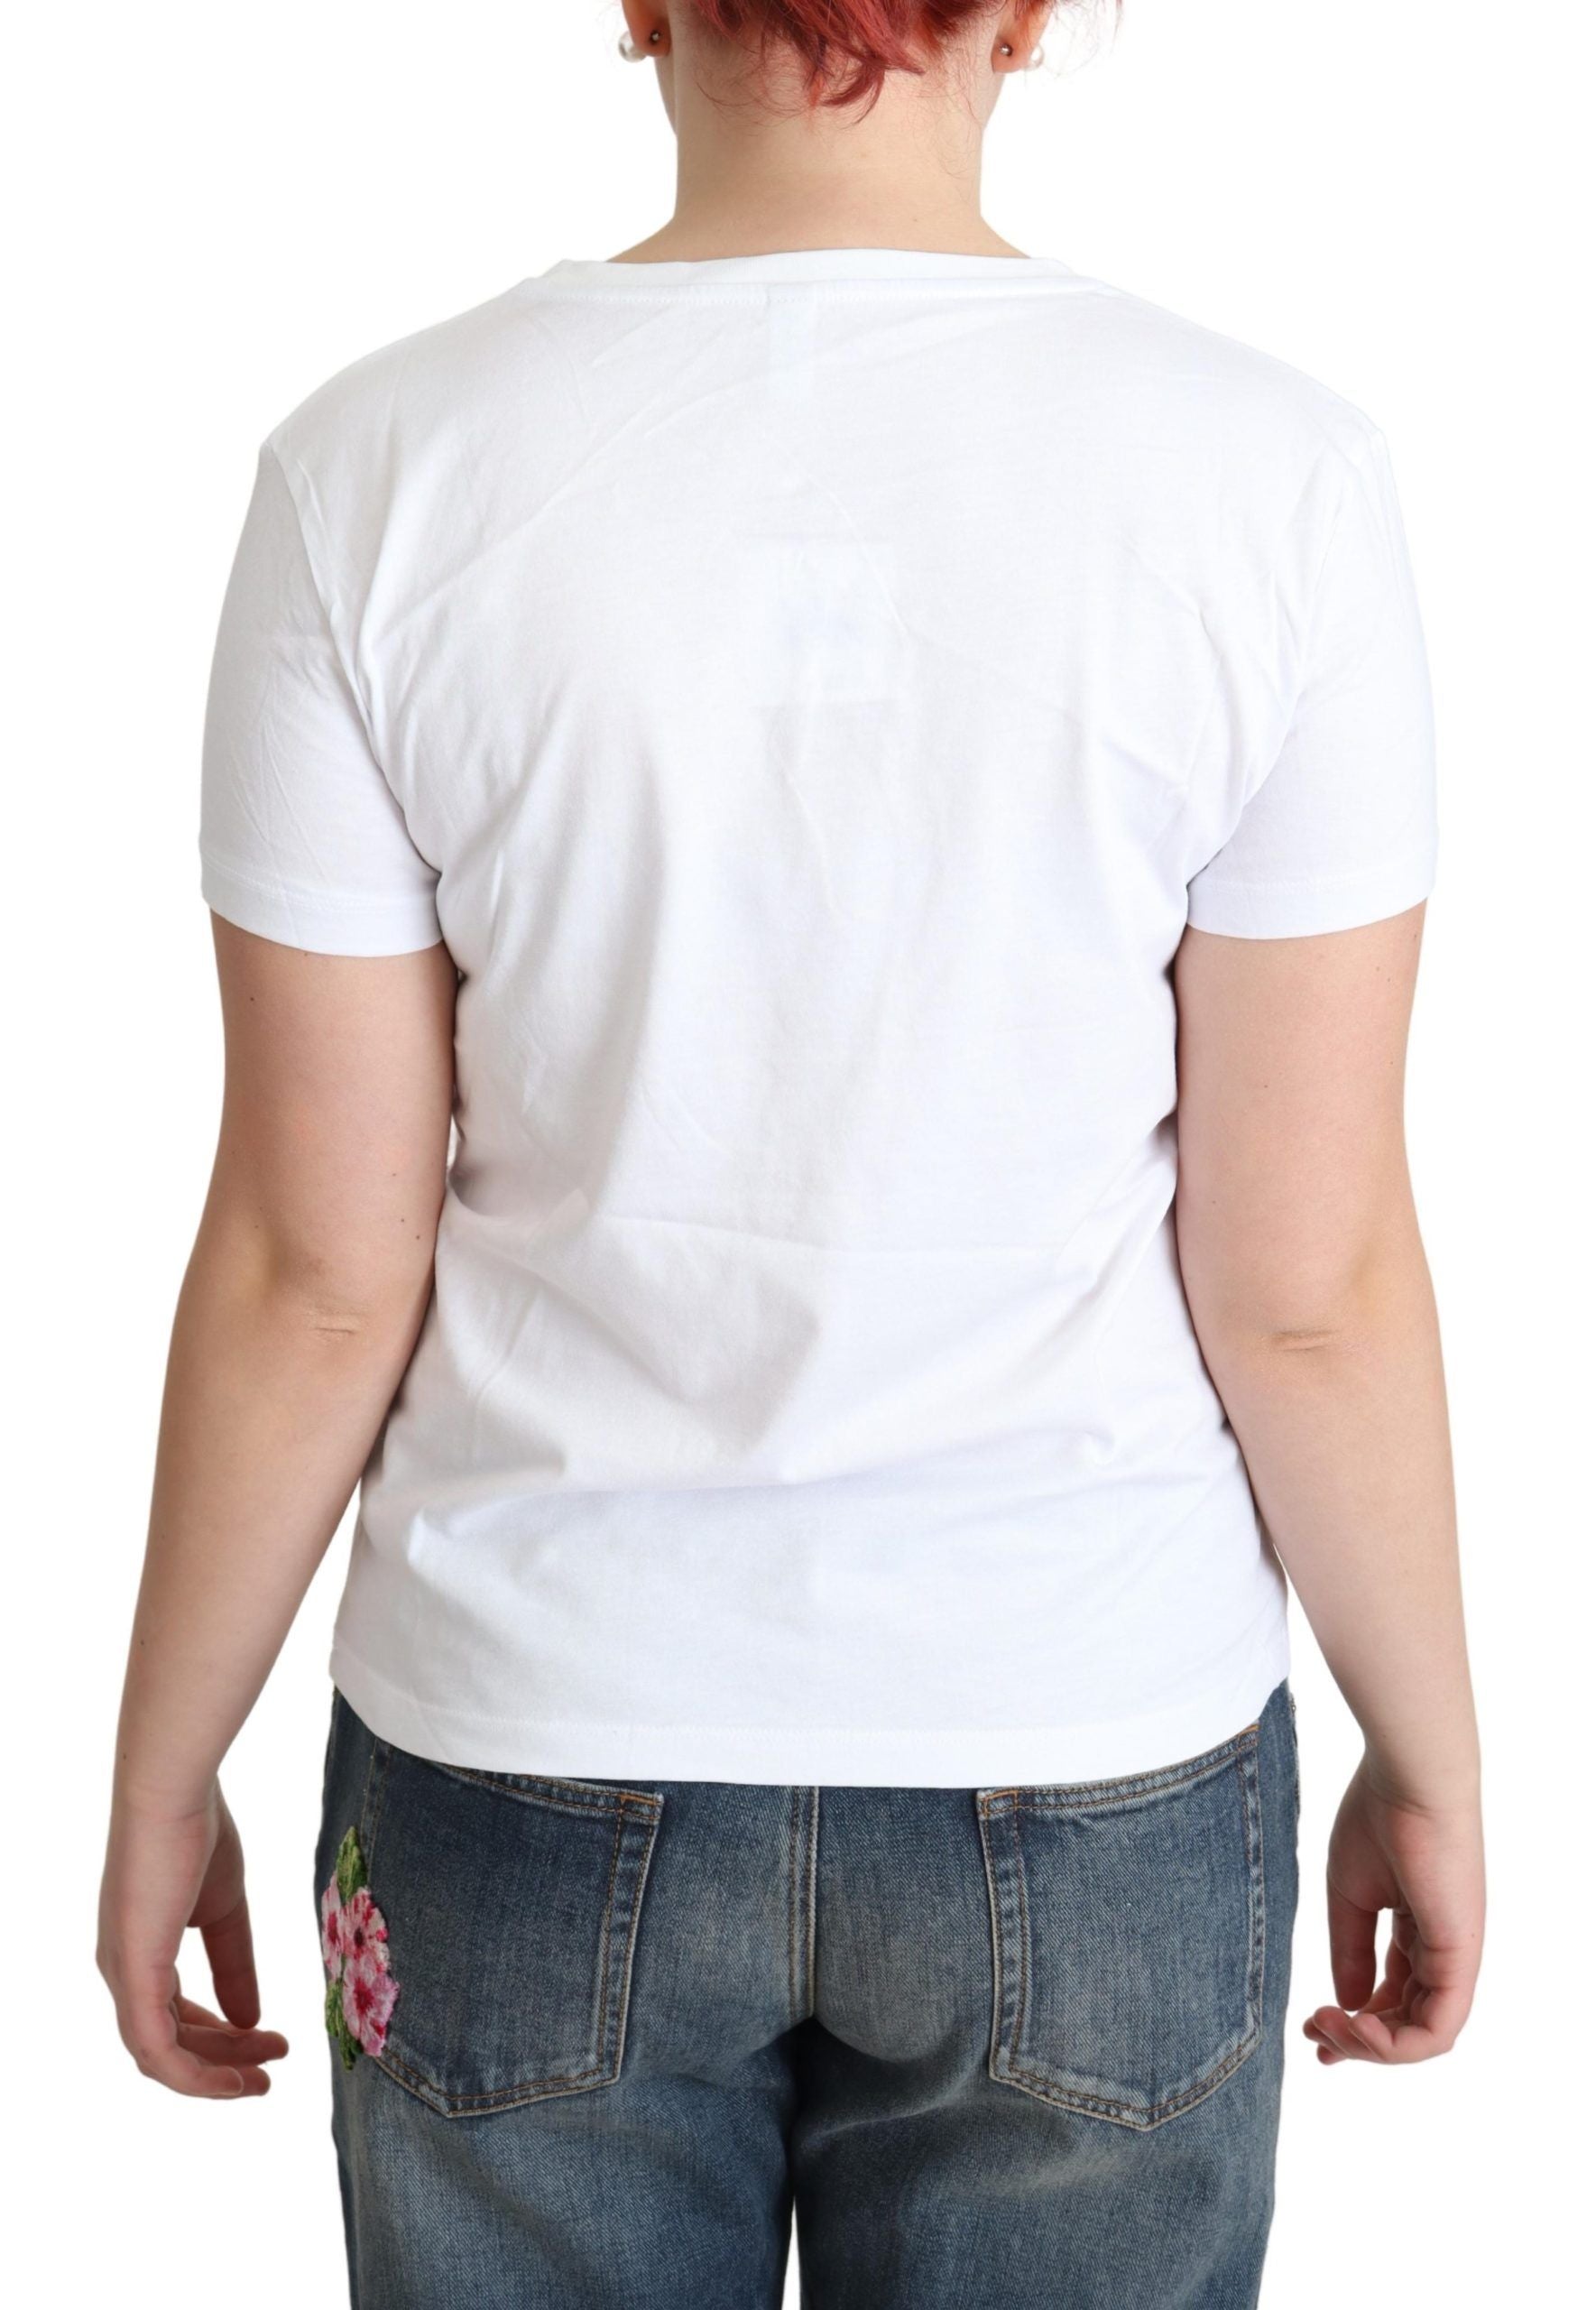 White Cotton Alphabet Letter Print Tops T-shirt